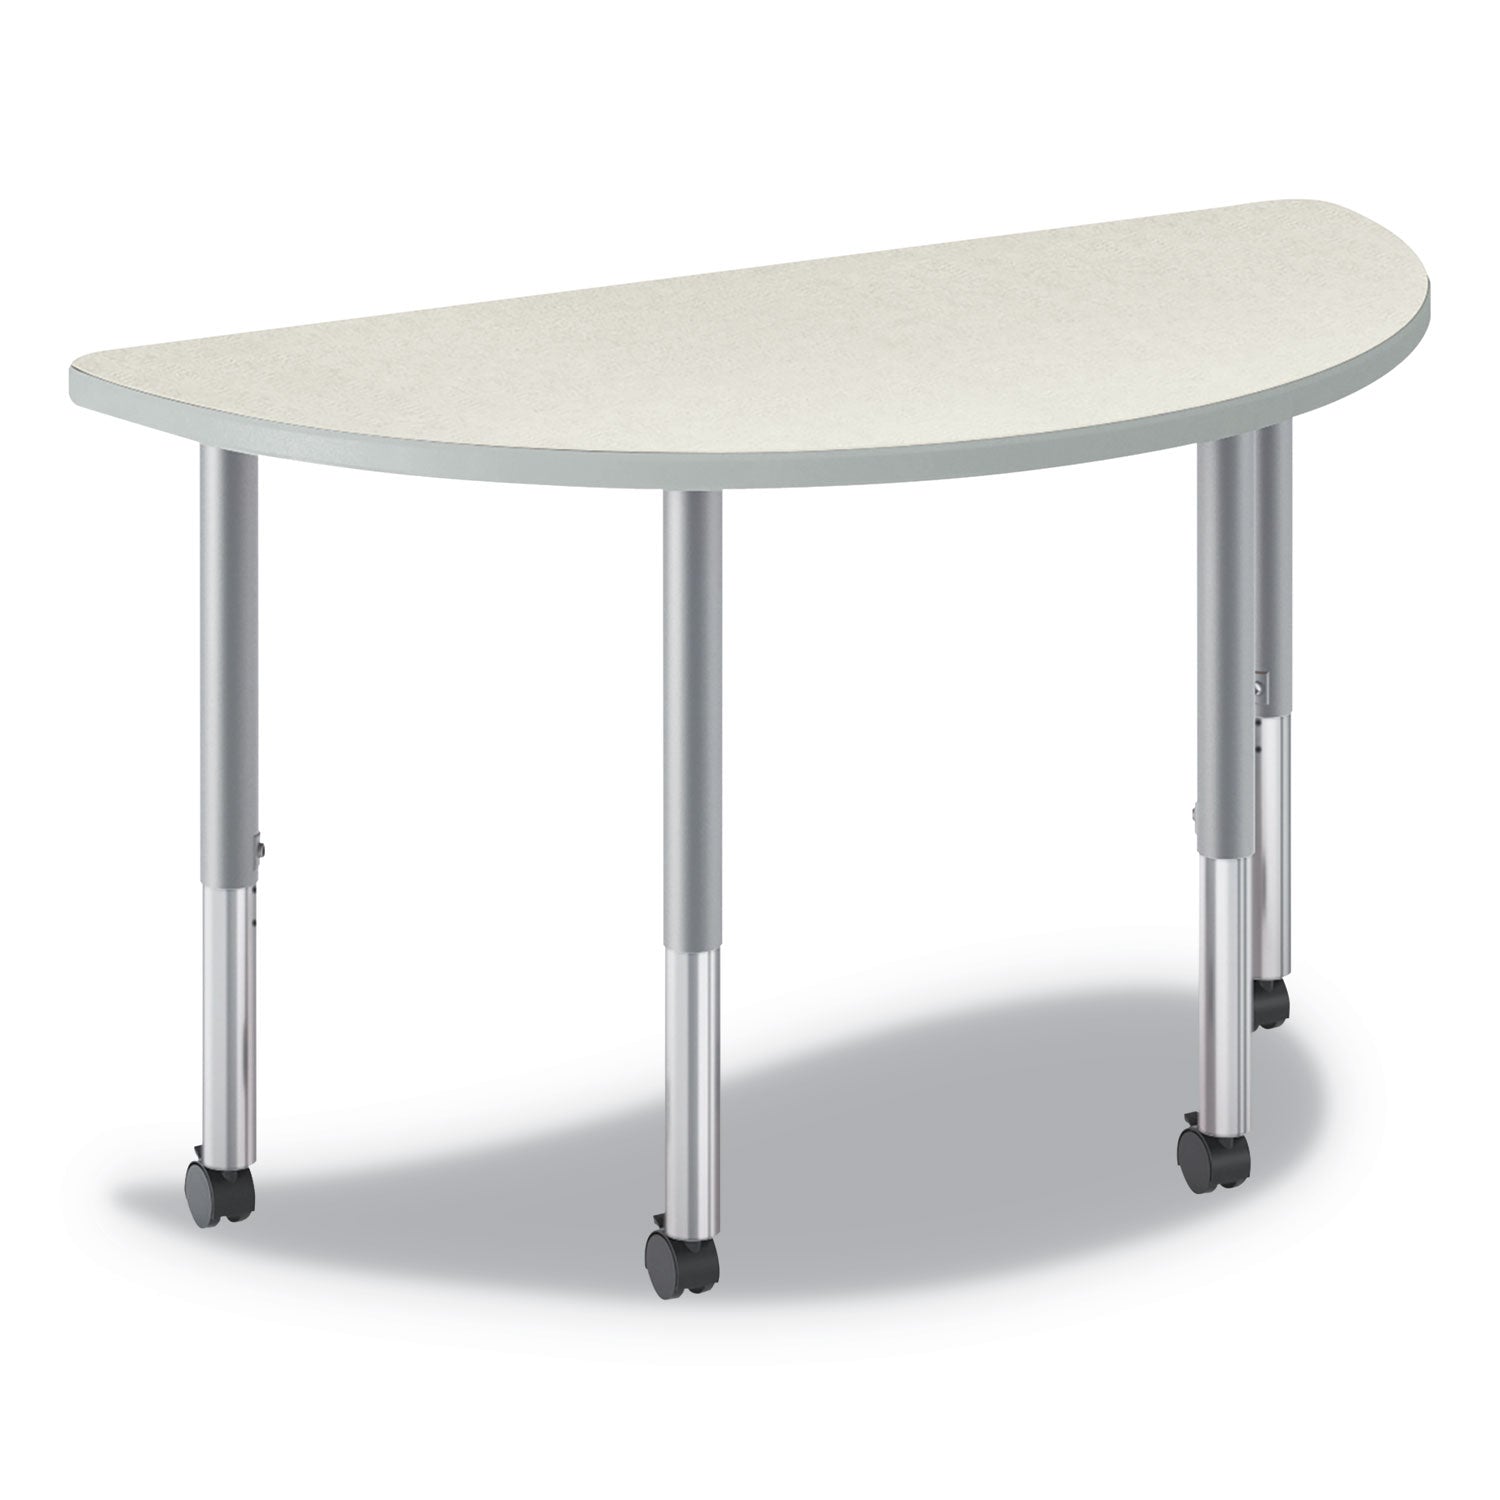 build-half-round-shape-table-top-60w-x-30d-silver-mesh_honsh3060enb9k - 2